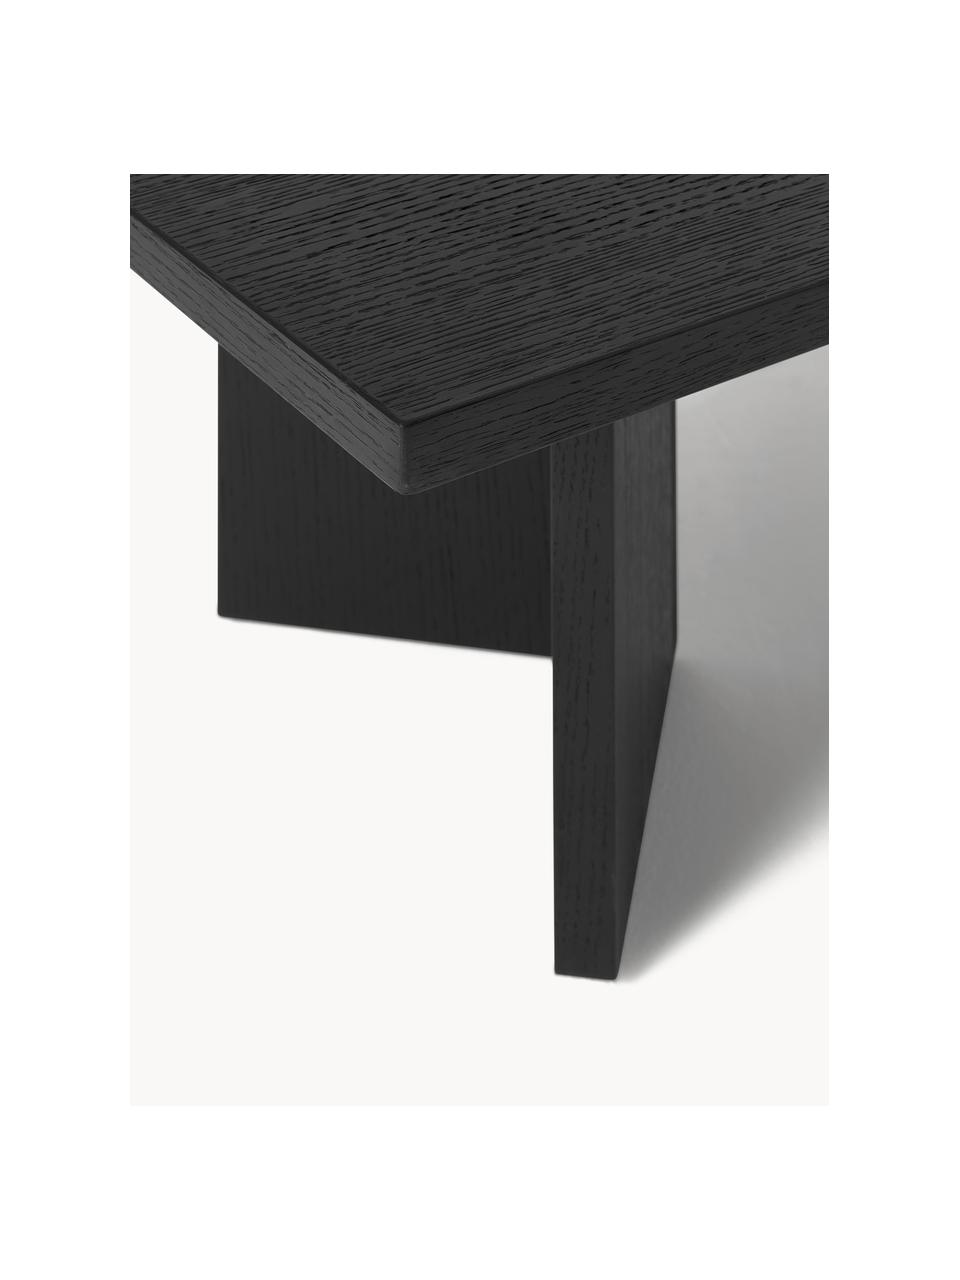 Drevený konferenčný stolík Toni, MDF-doska strednej hustoty s dubovou dyhou, lakovaná, Čierna, Š 100 x D 55 cm